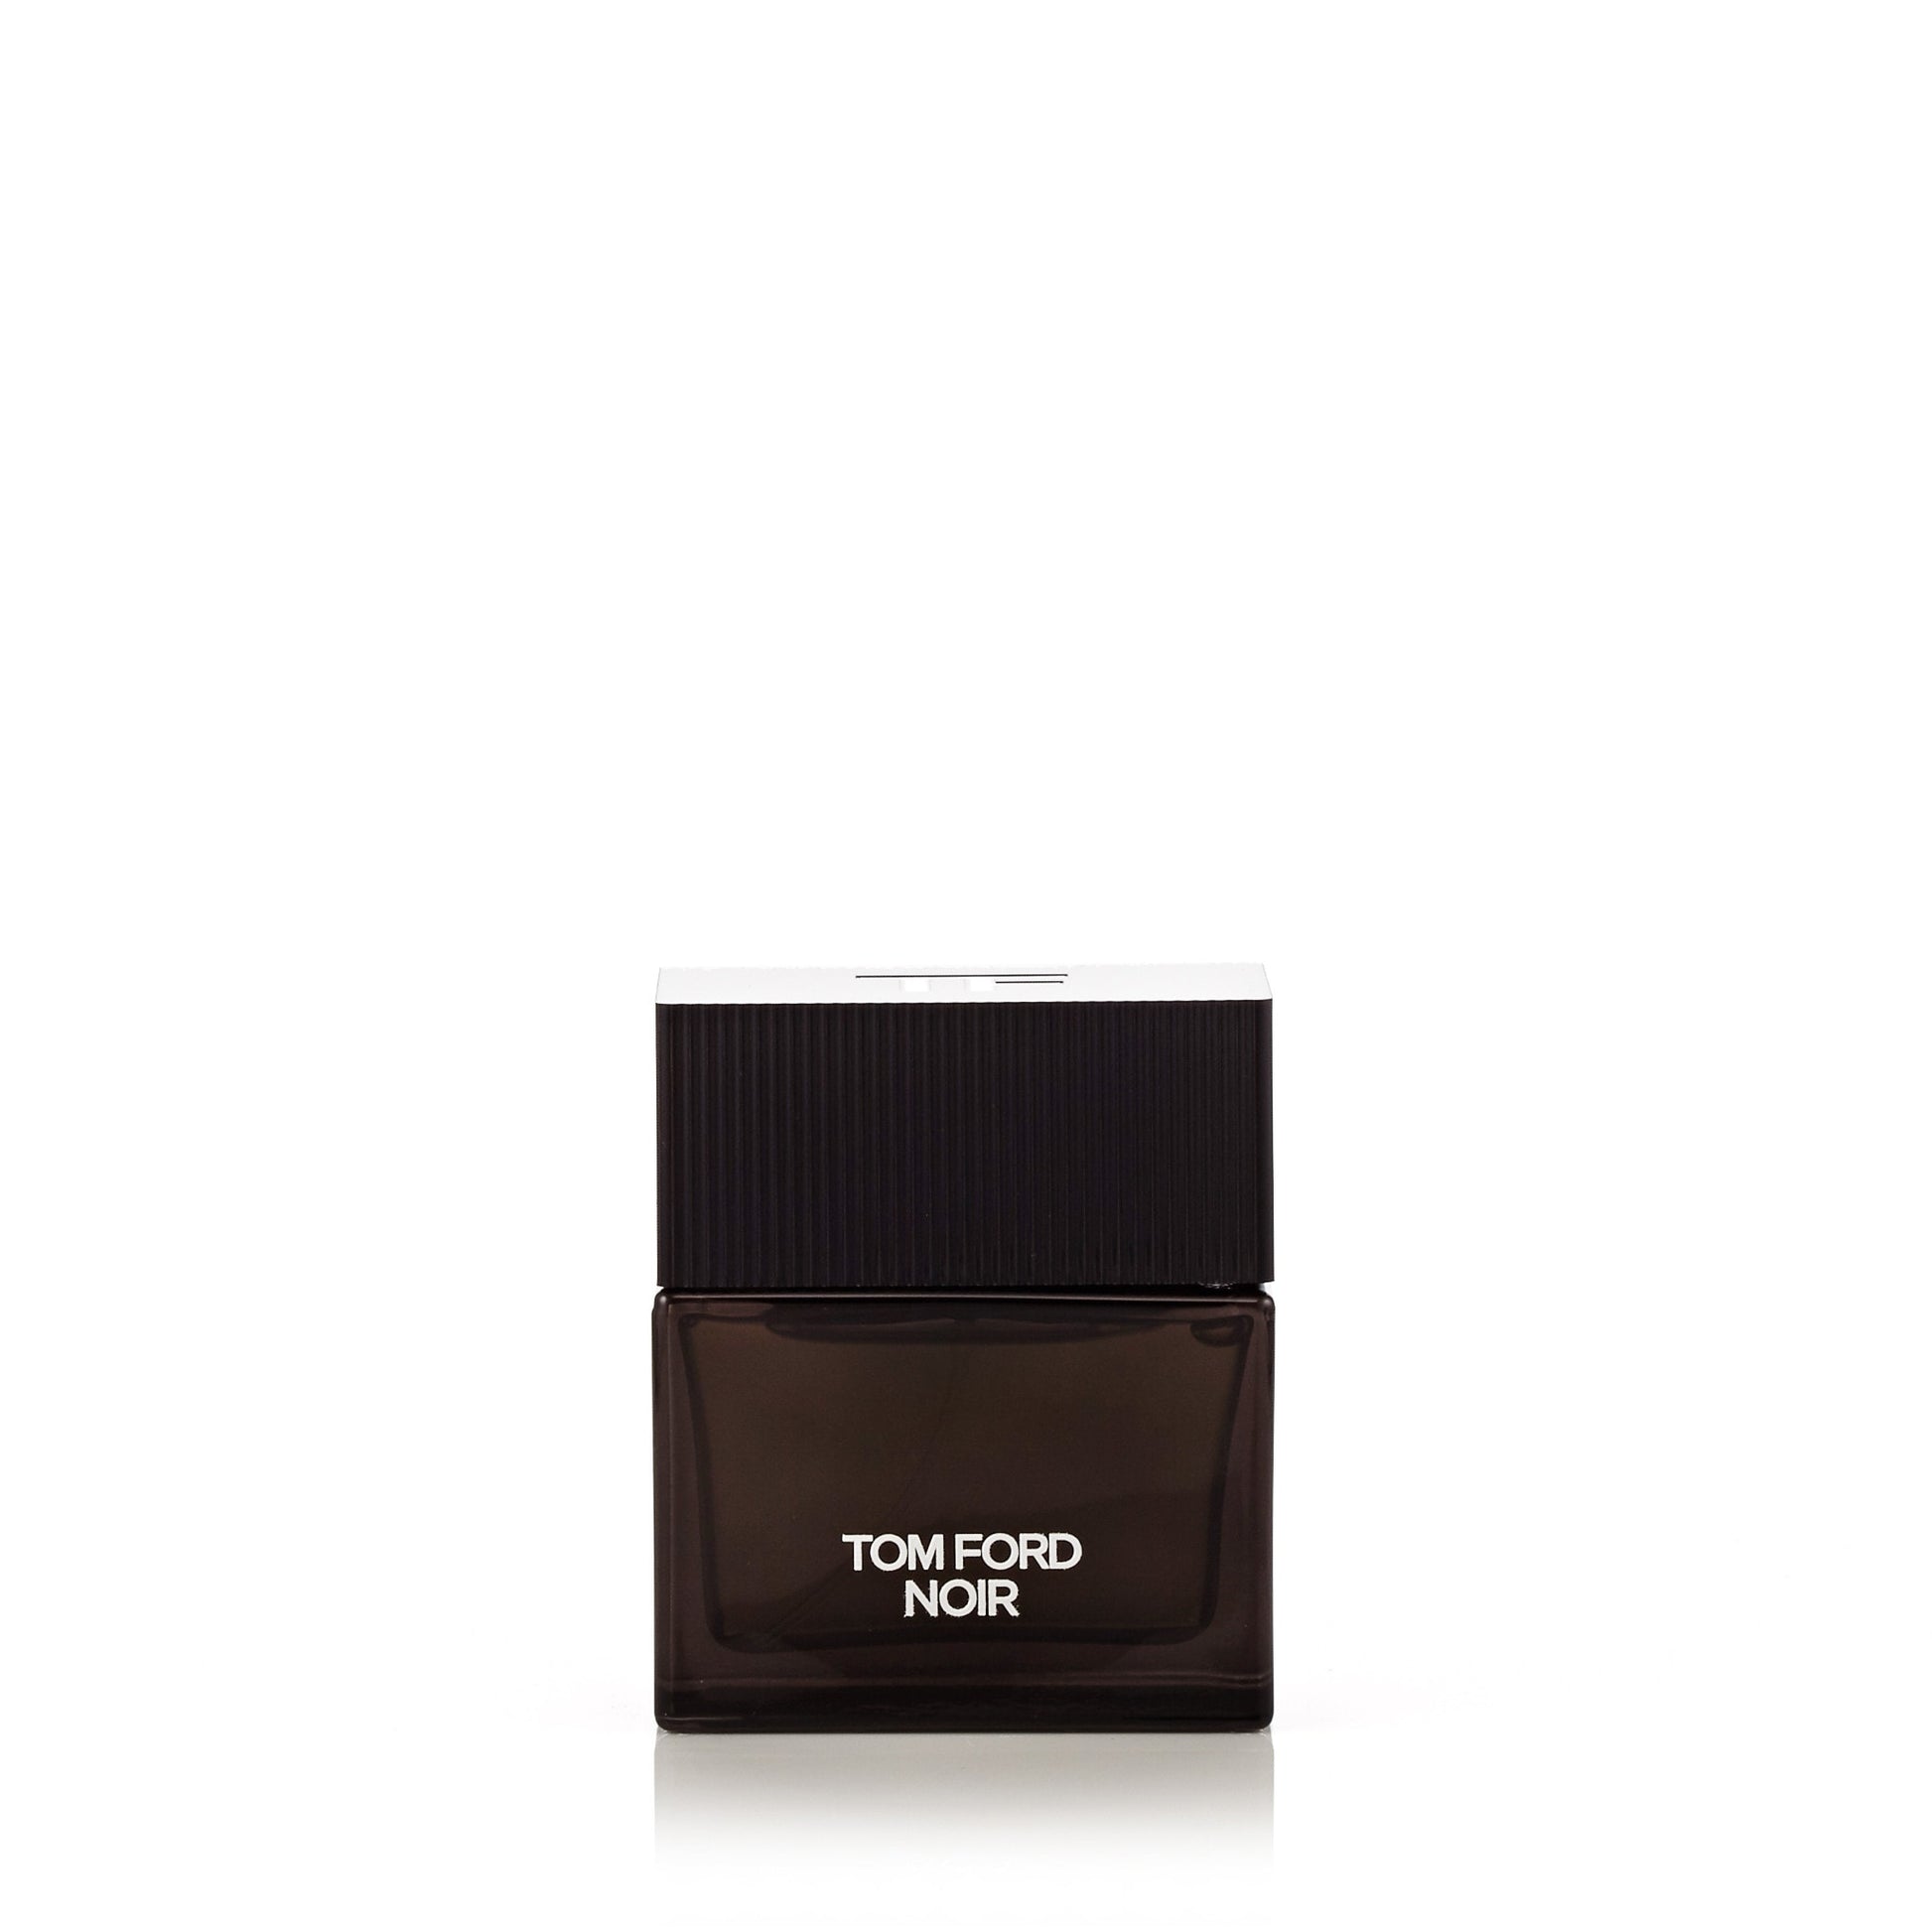 Tom Ford Noir Eau de Parfum Spray for Men by Tom Ford, Product image 3